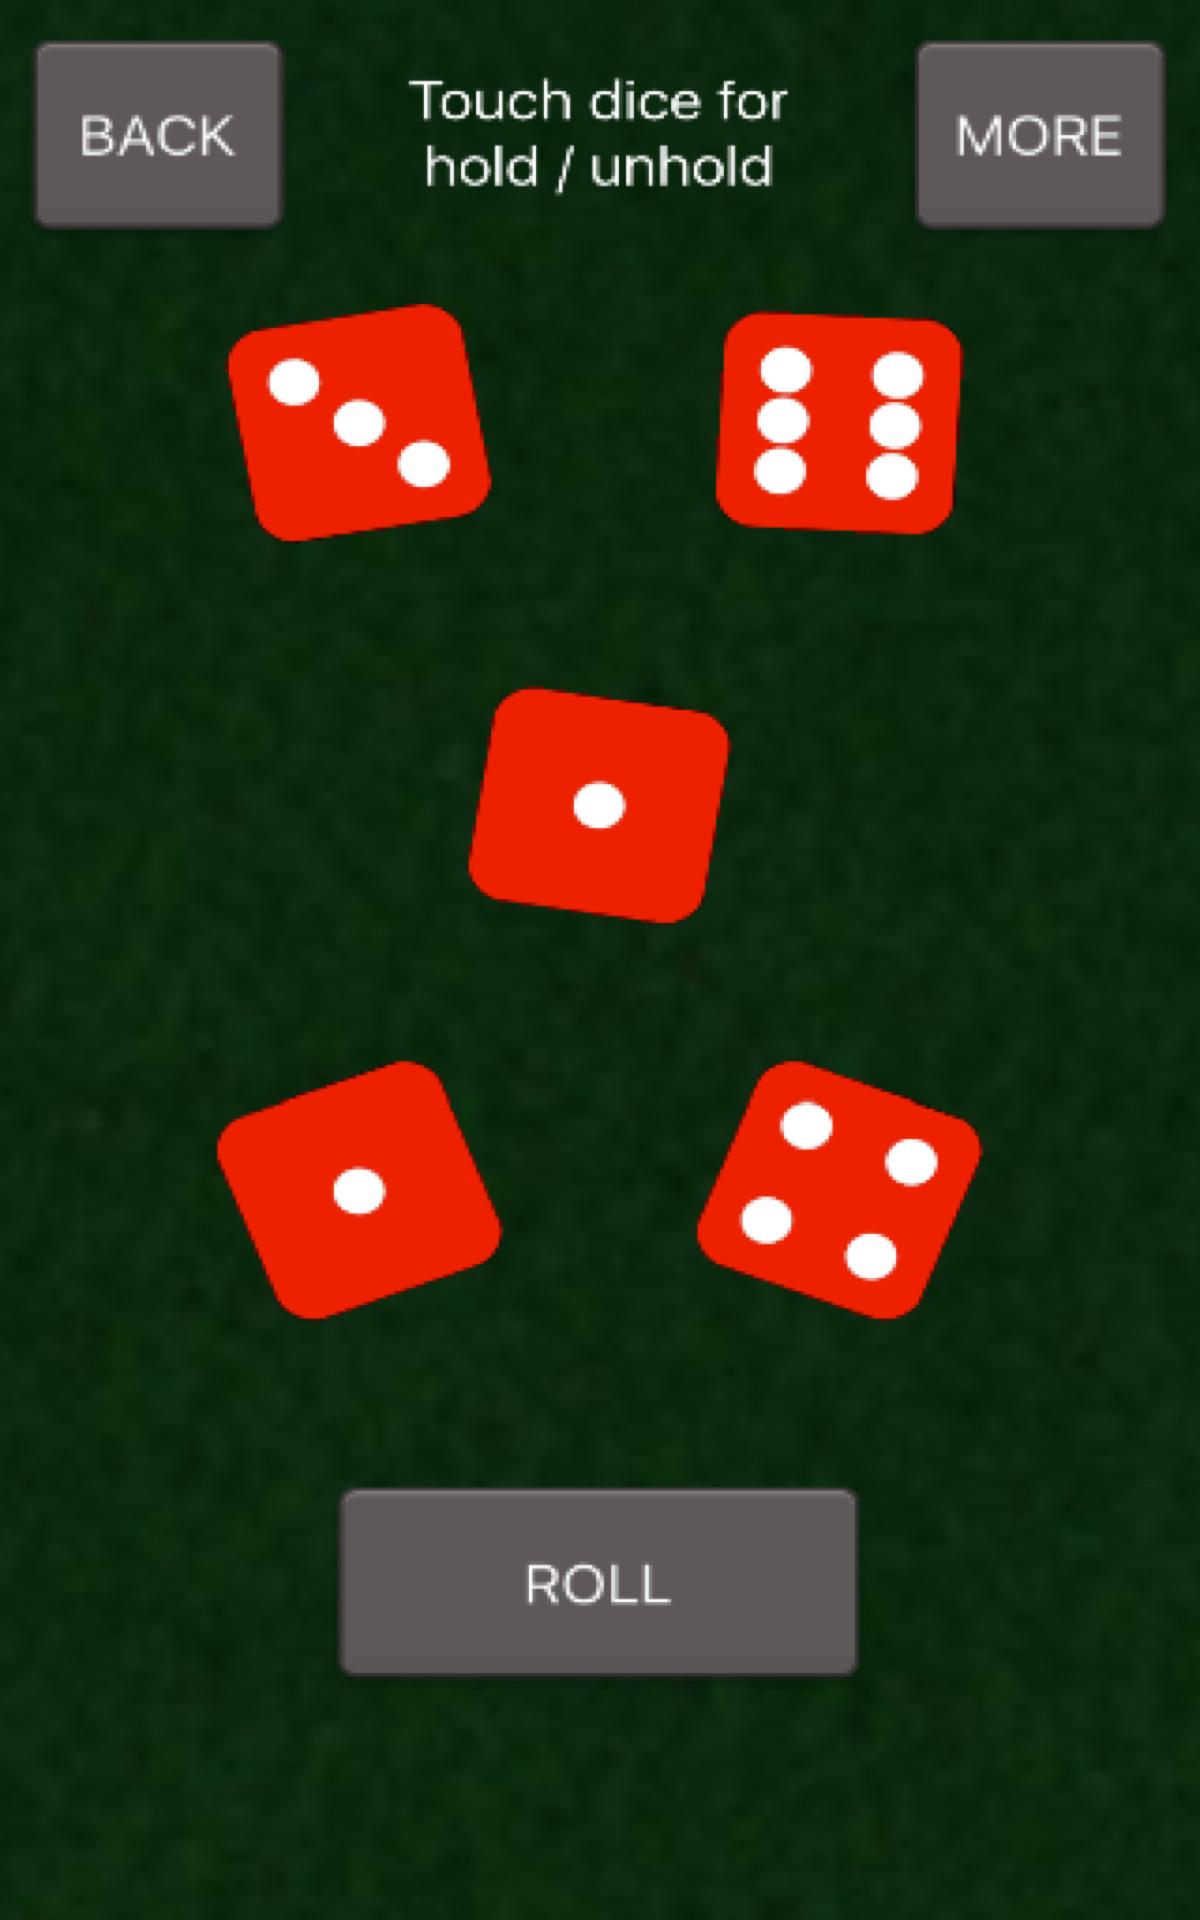 Dice Roll Casino game. Roll dice app. Cheat dice.